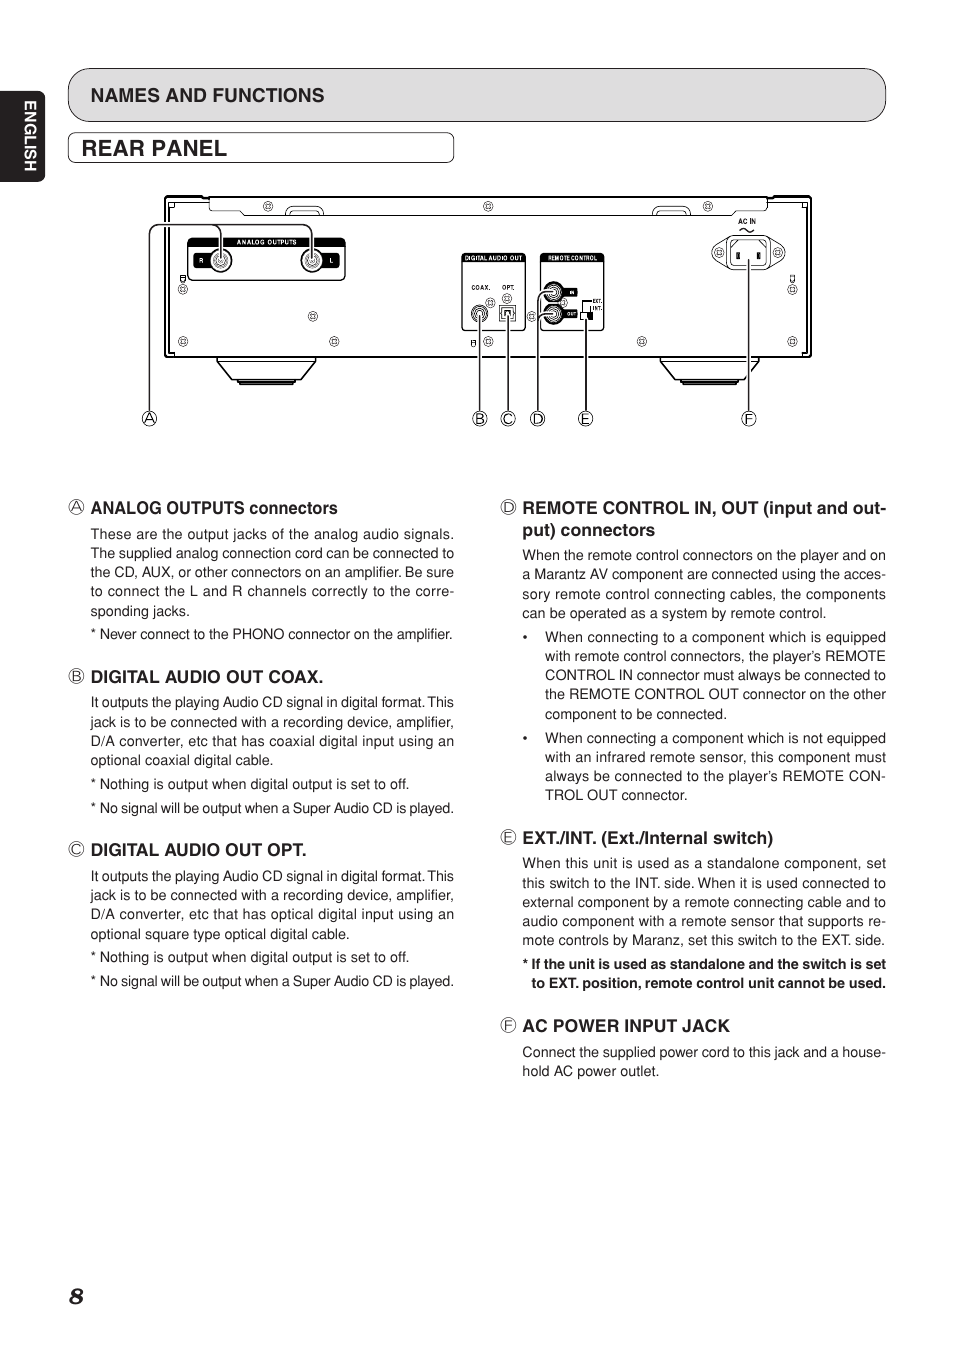 Rear panel | Marantz SA-15S1 User Manual | Page 12 / 25